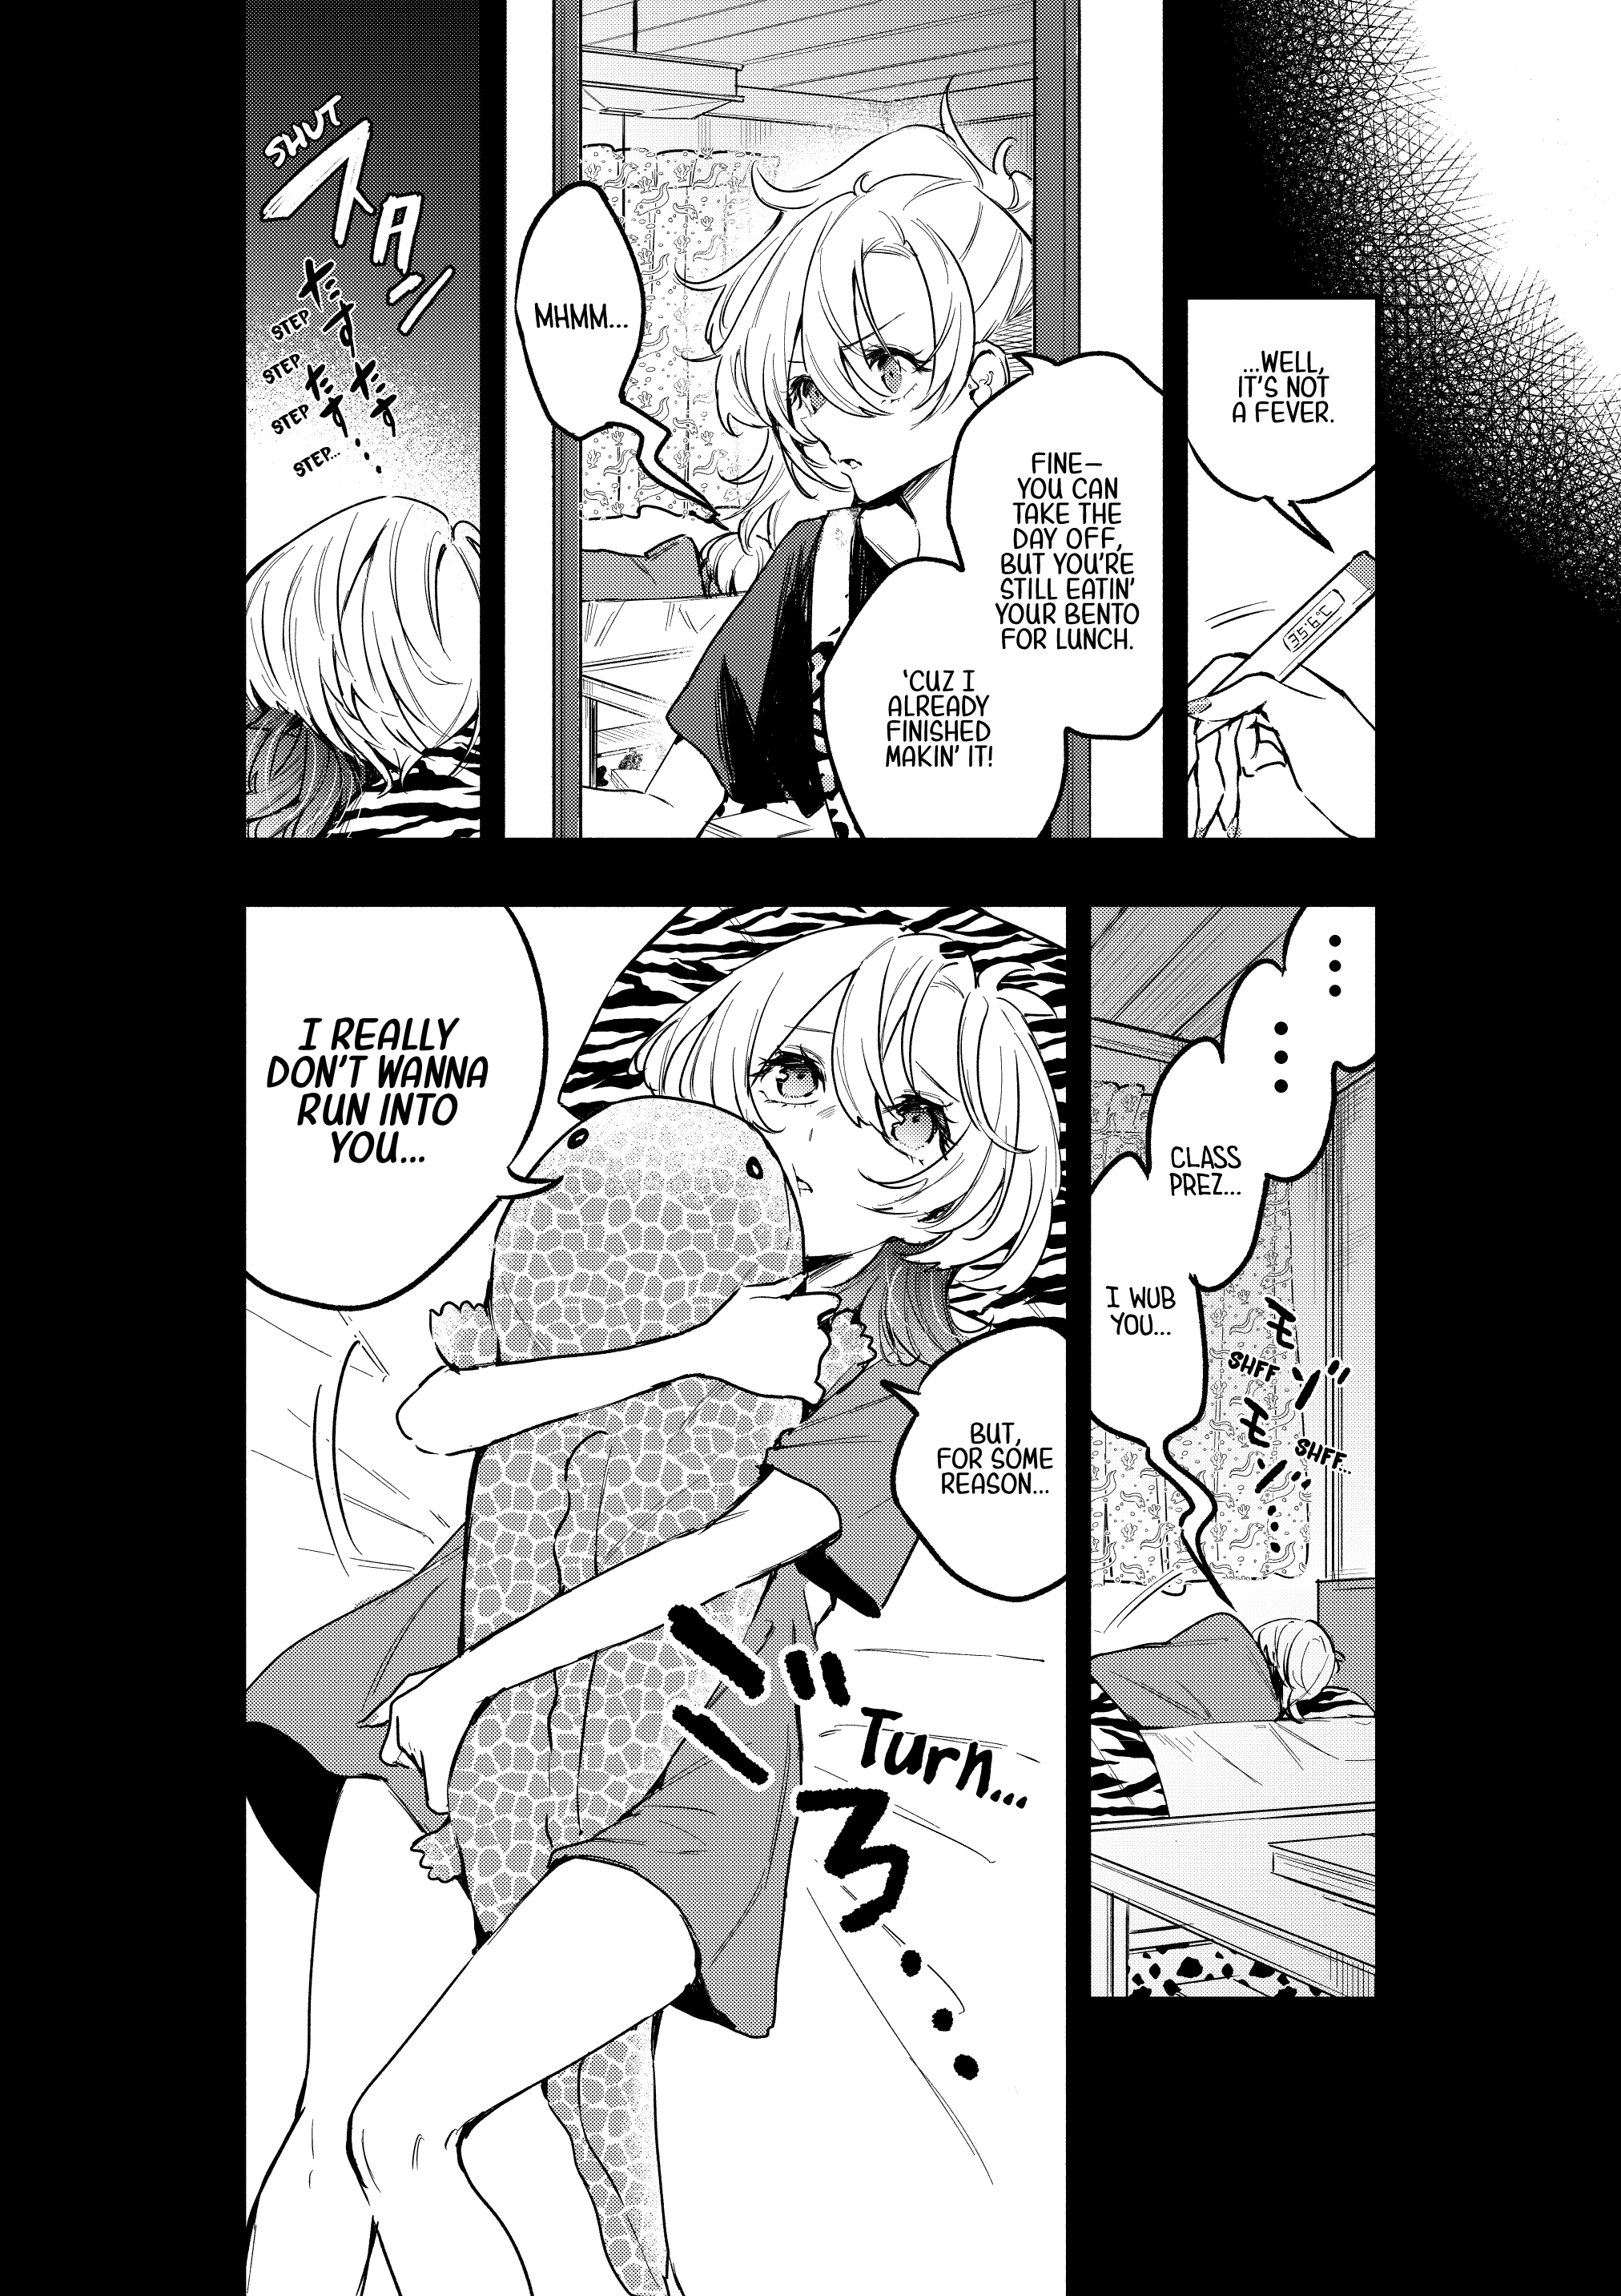 Kanpeki Na Iinchou-Chan To Gouhou Gyaru-Chan No Manga - 4 page 3-0480a6ed